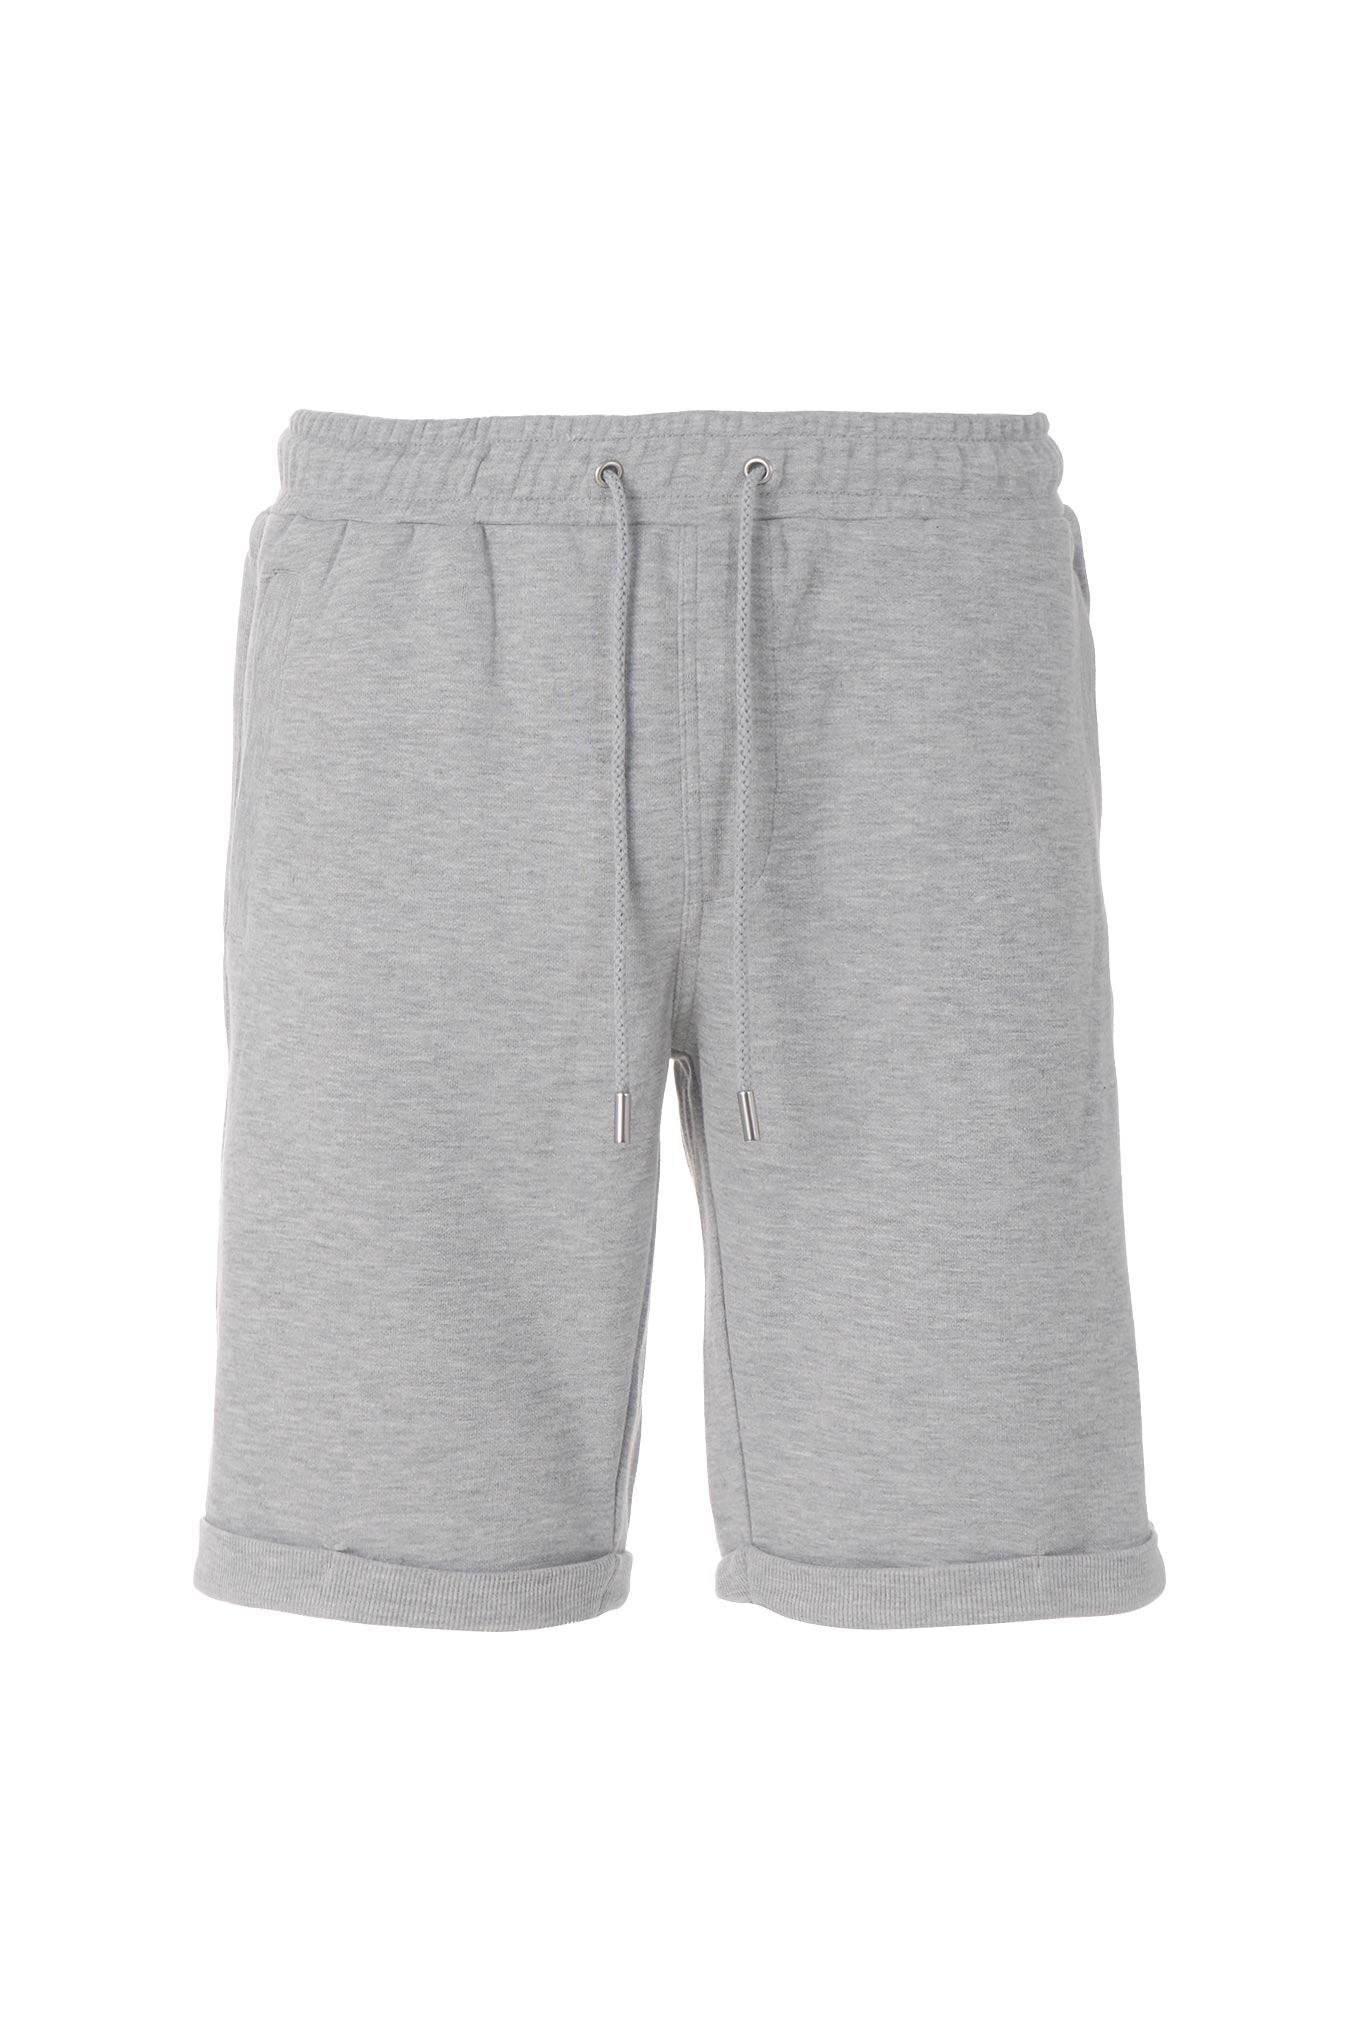 Sportswear Shorts Mix Grey Sport Man